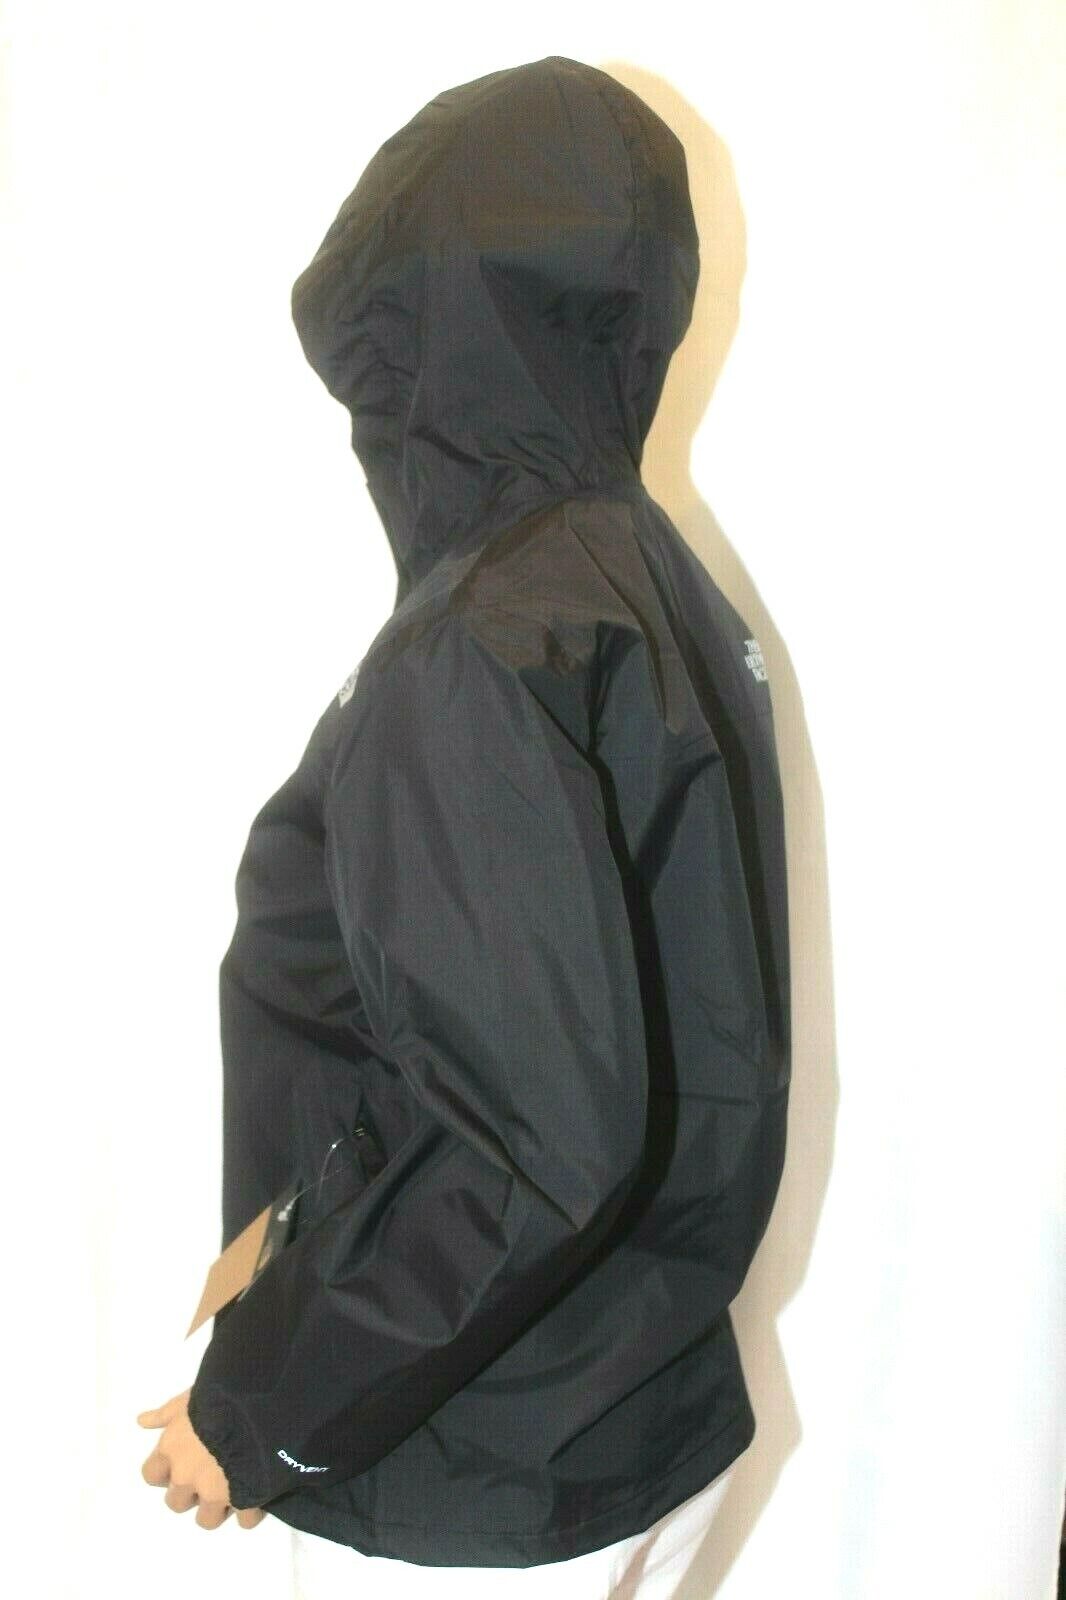 *NWT* $70. North Face Resolve Reflective Girls Black Rain Jacket HyVent Hood - S